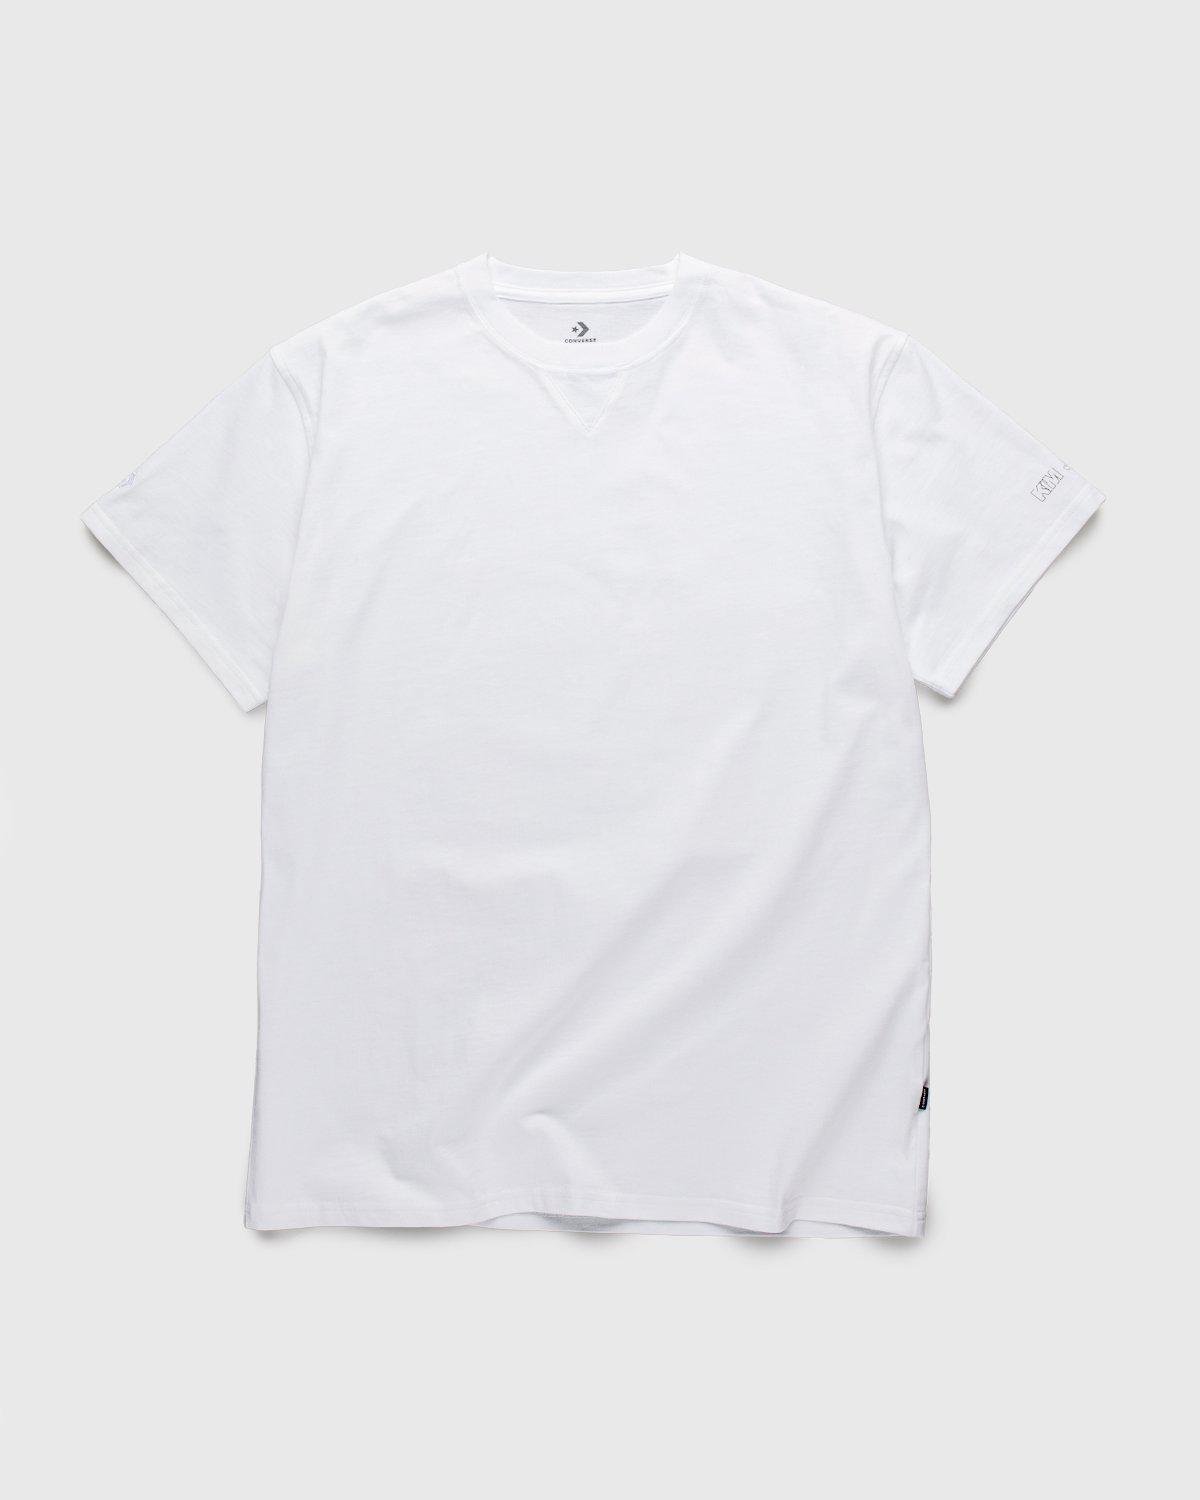 Converse x Kim Jones – T-Shirt White by CONVERSE X KIM JONES